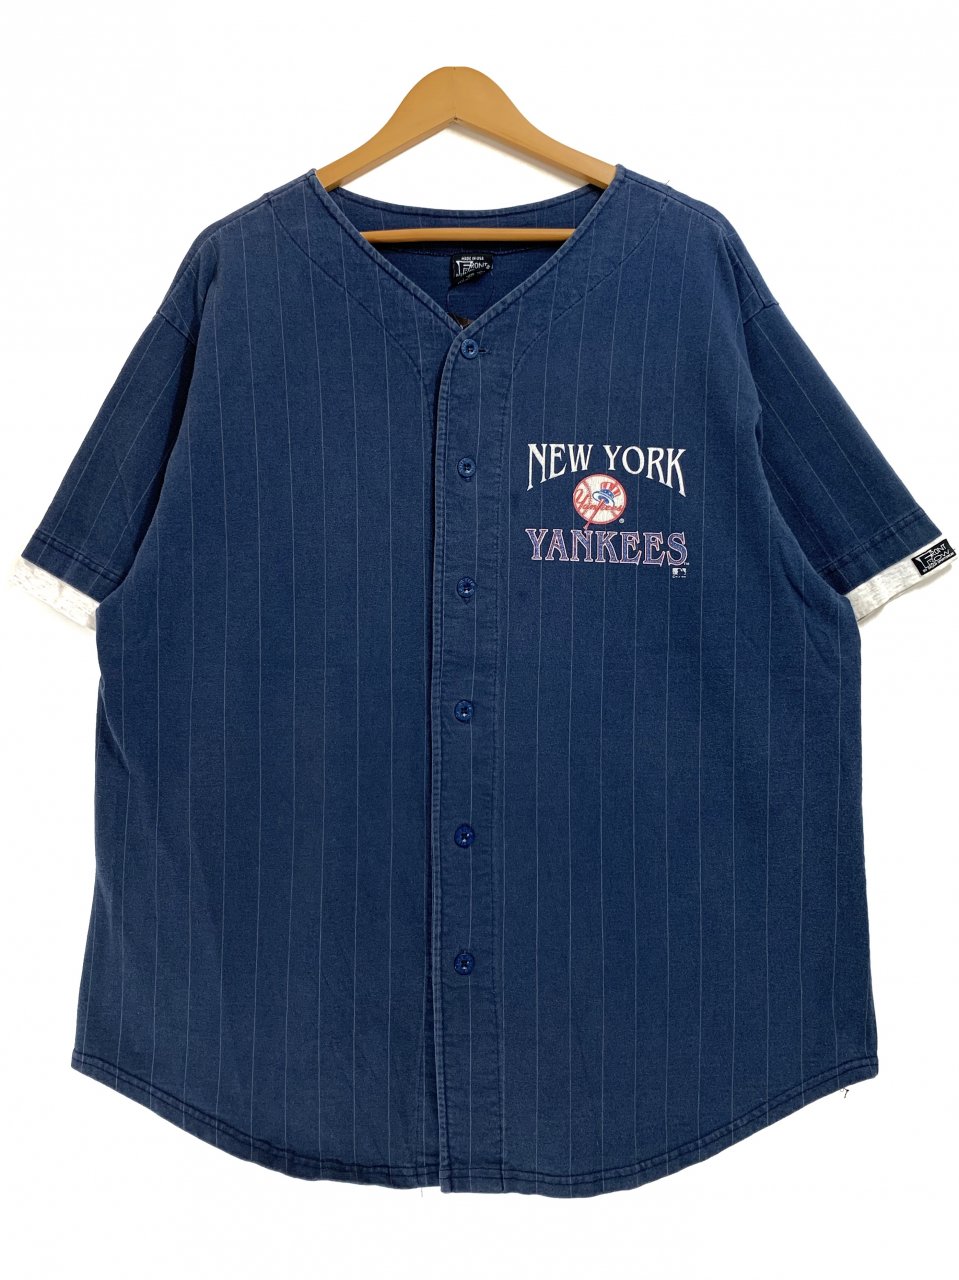 USA製 90s NEWYORK YANKEES Cotton Baseball Shirt 紺 XL MLB